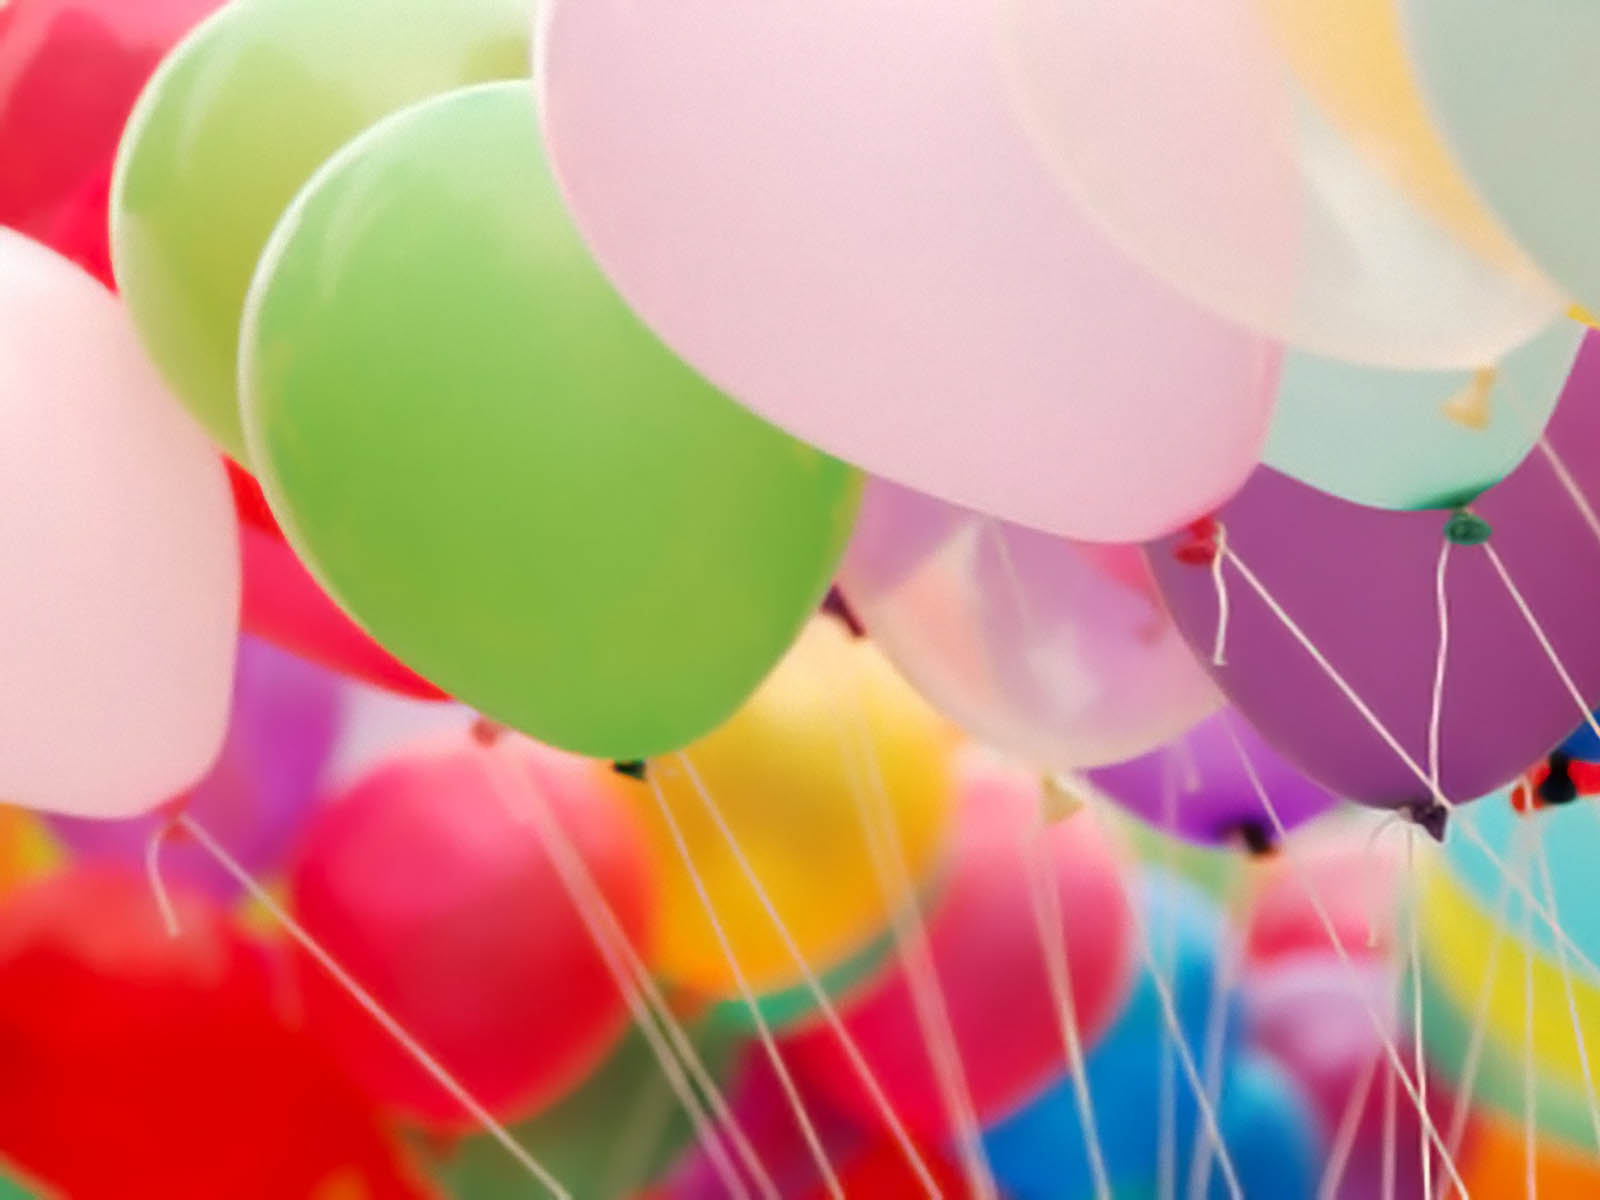  Gambar  Gambar  Balon dengan Warna  Warni  Cantik 